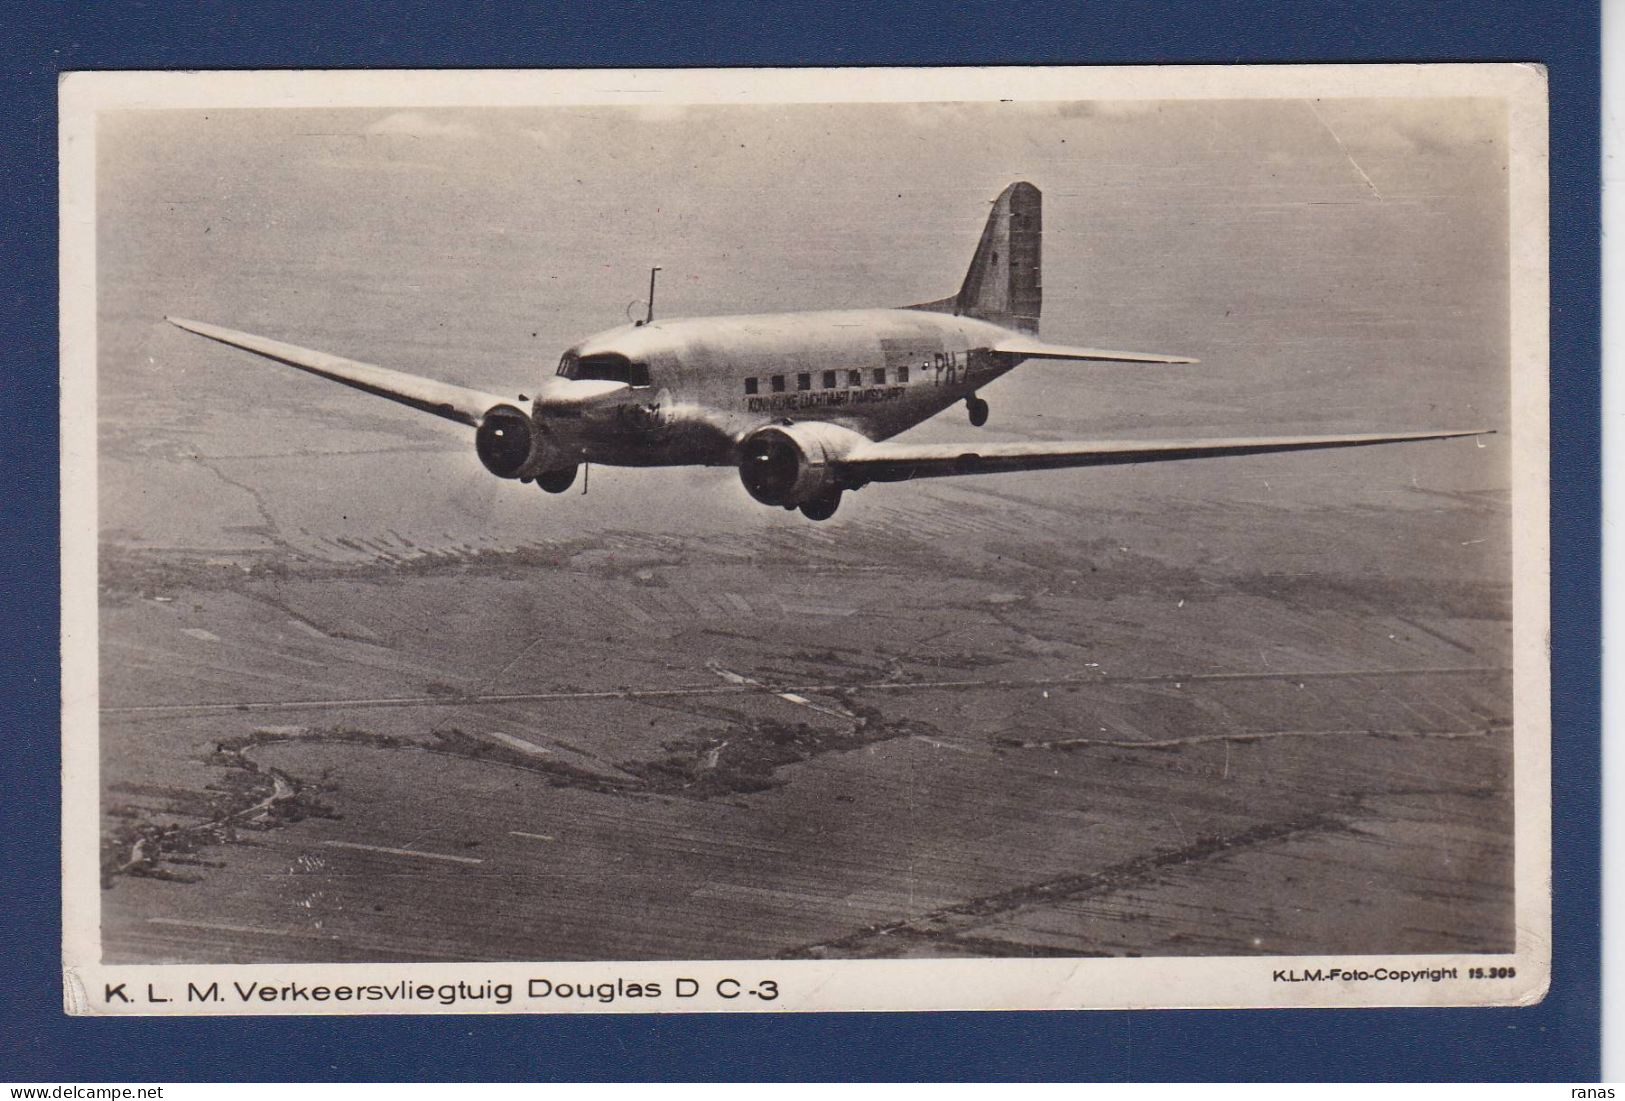 CPSM Aviation KLM Voir Scan Du Dos - 1919-1938: Entre Guerres